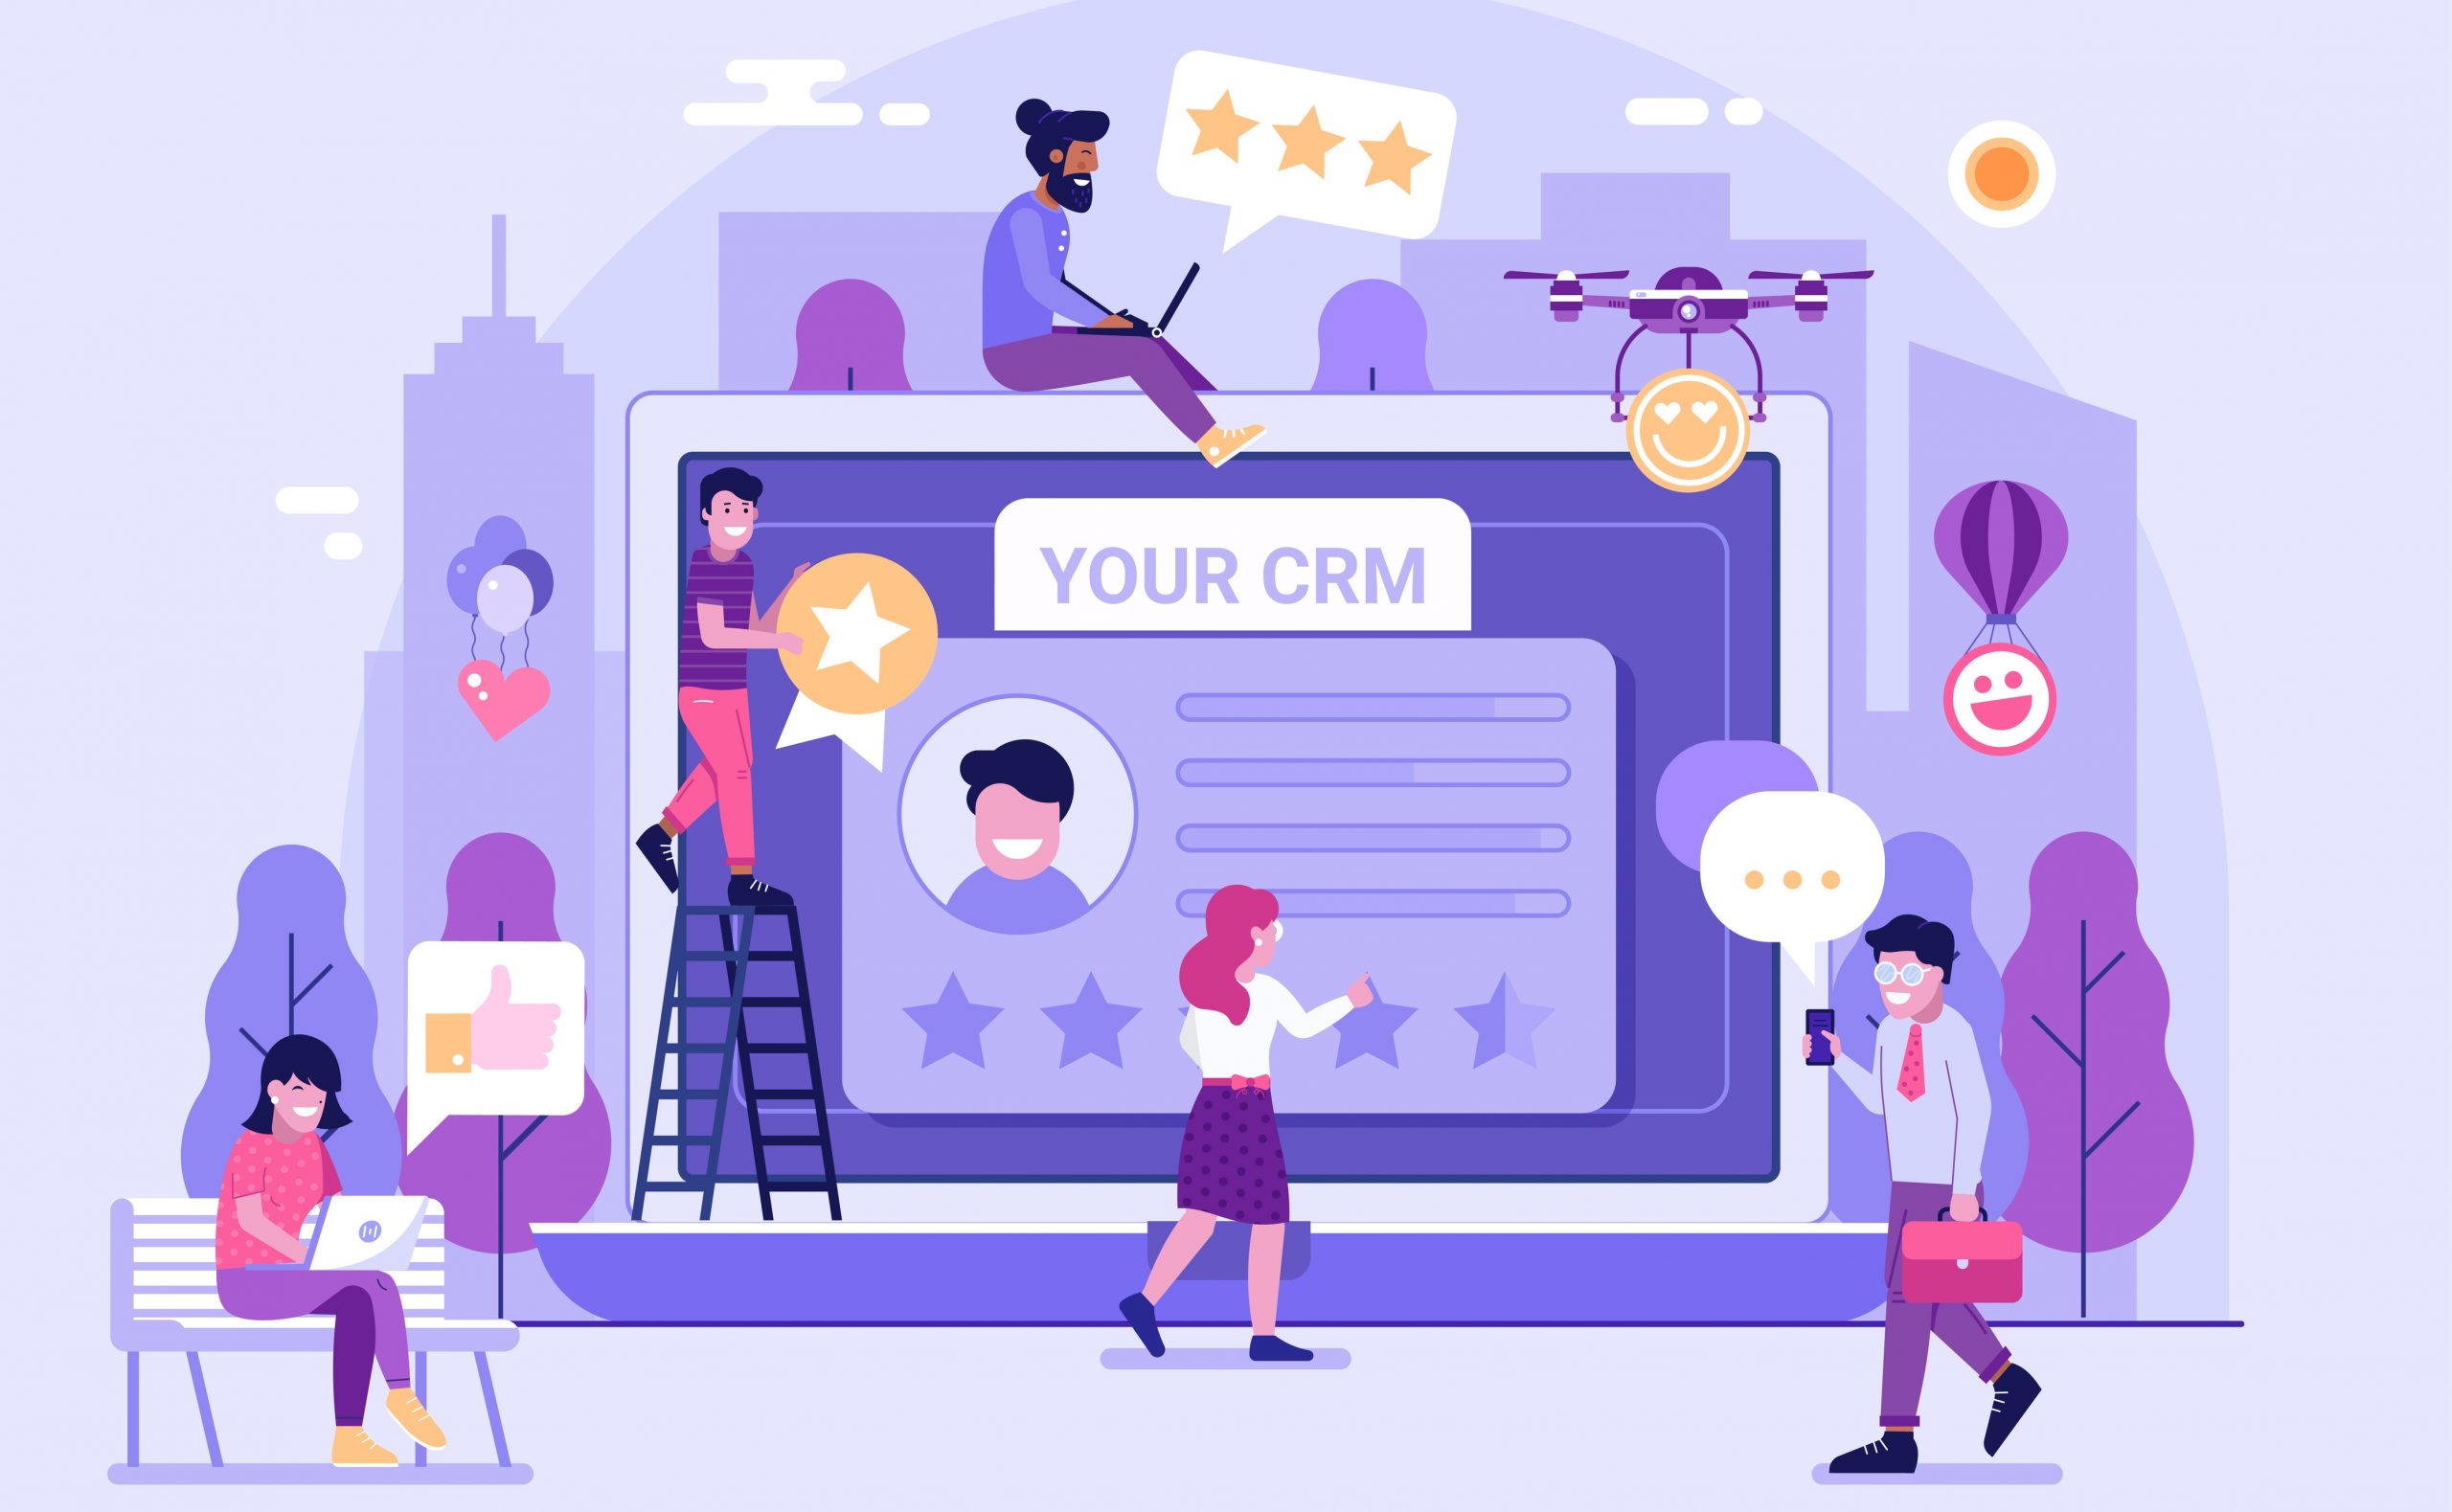 Customer relationship management platform concept with happy clients leaving positive feedback. Illustration.